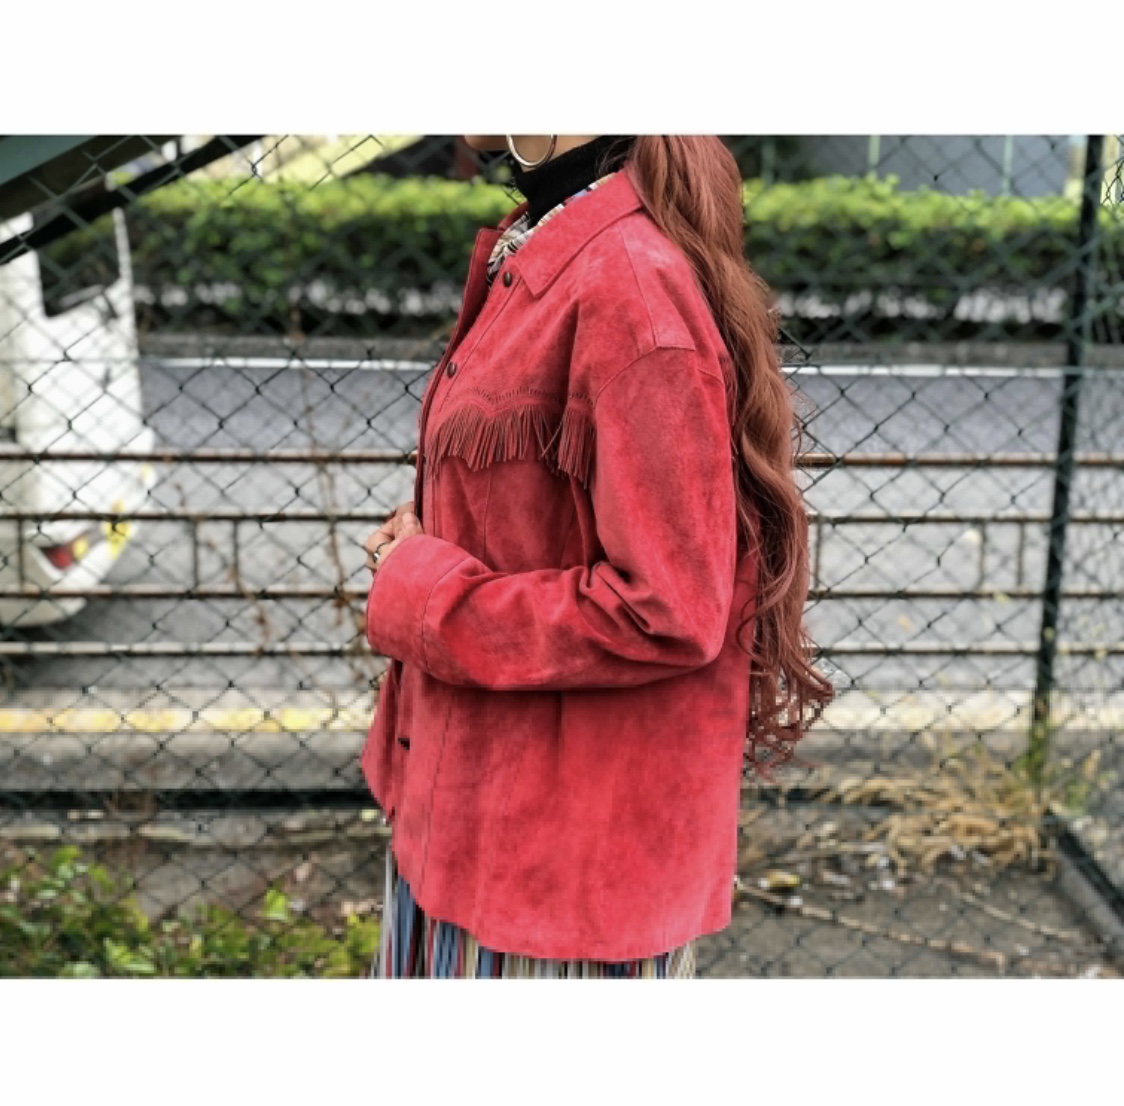 Vintage smoky red leather jacket